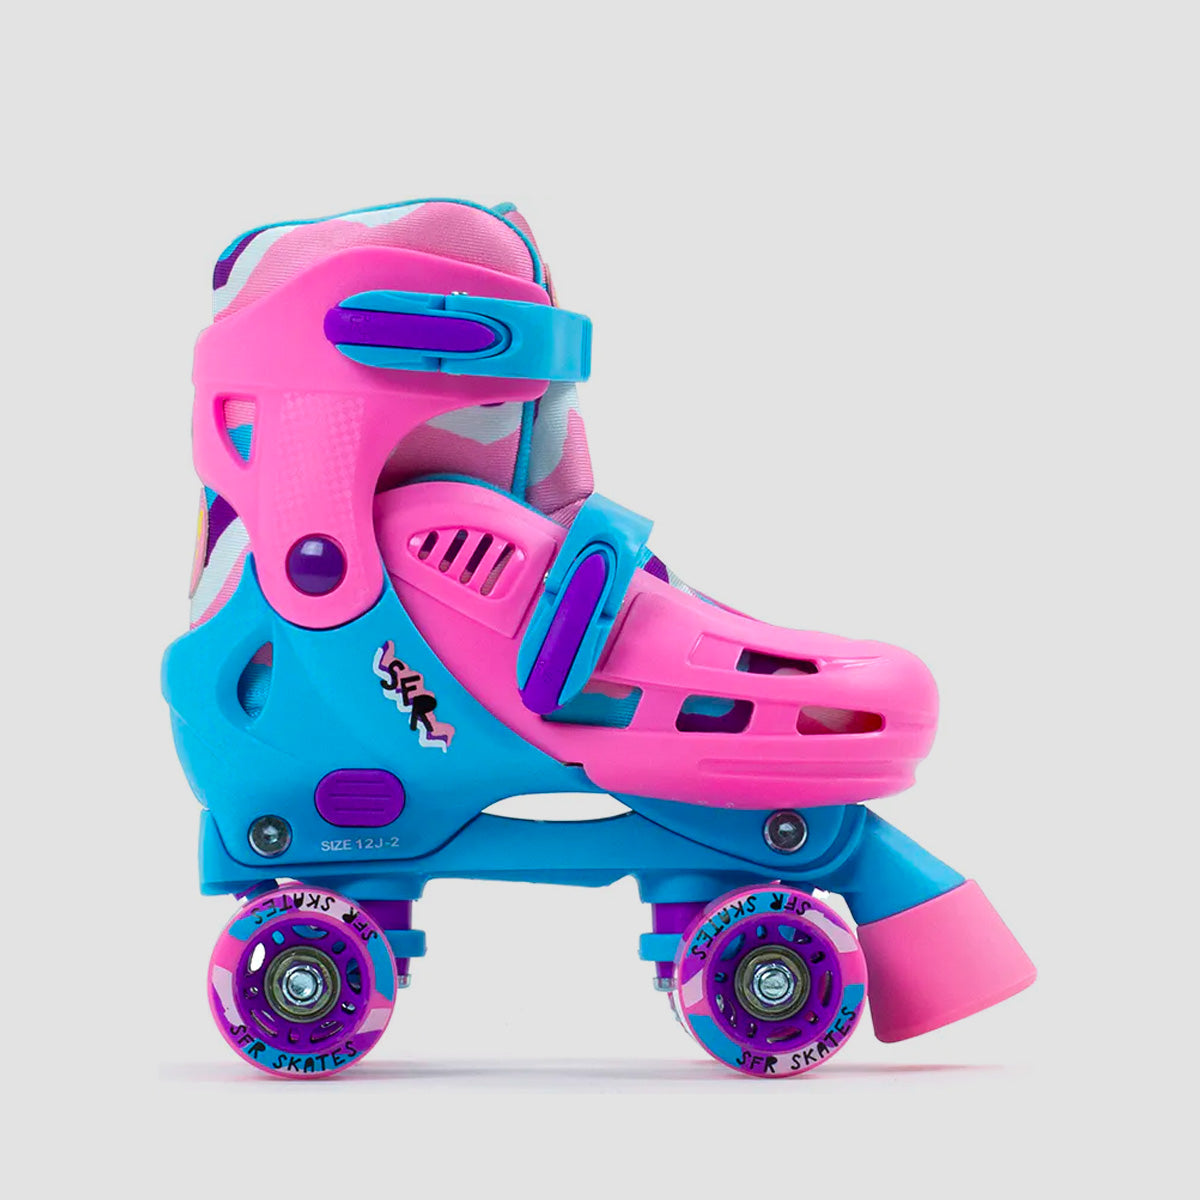 SFR Hurricane III Adjustable Quad Skates Pink/Blue - Kids